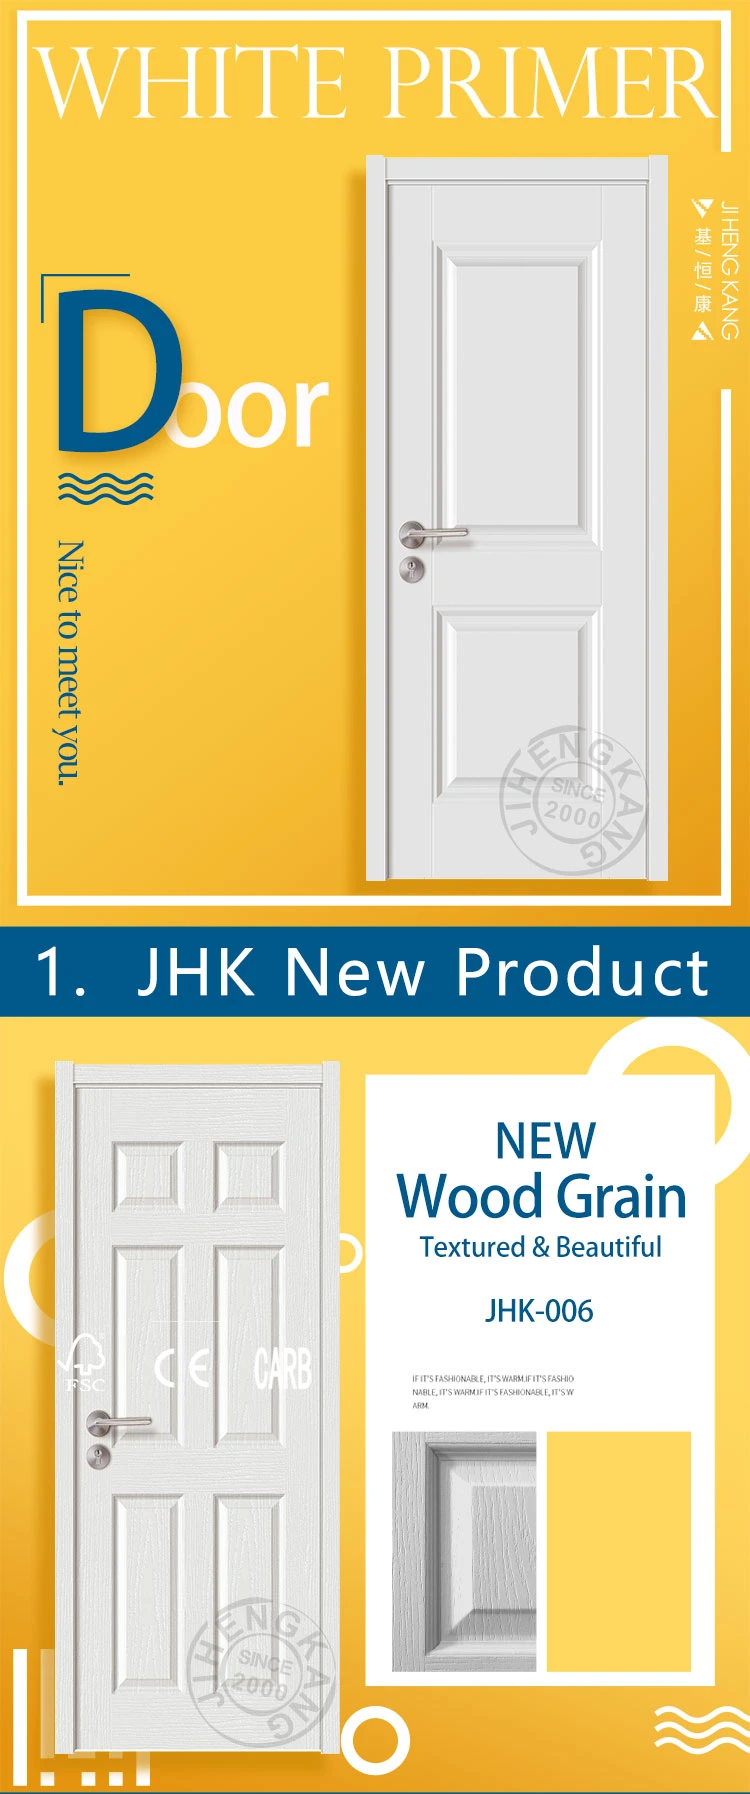 Jhk-004 New Design Rustic Wood Wood Grain White Primer Door